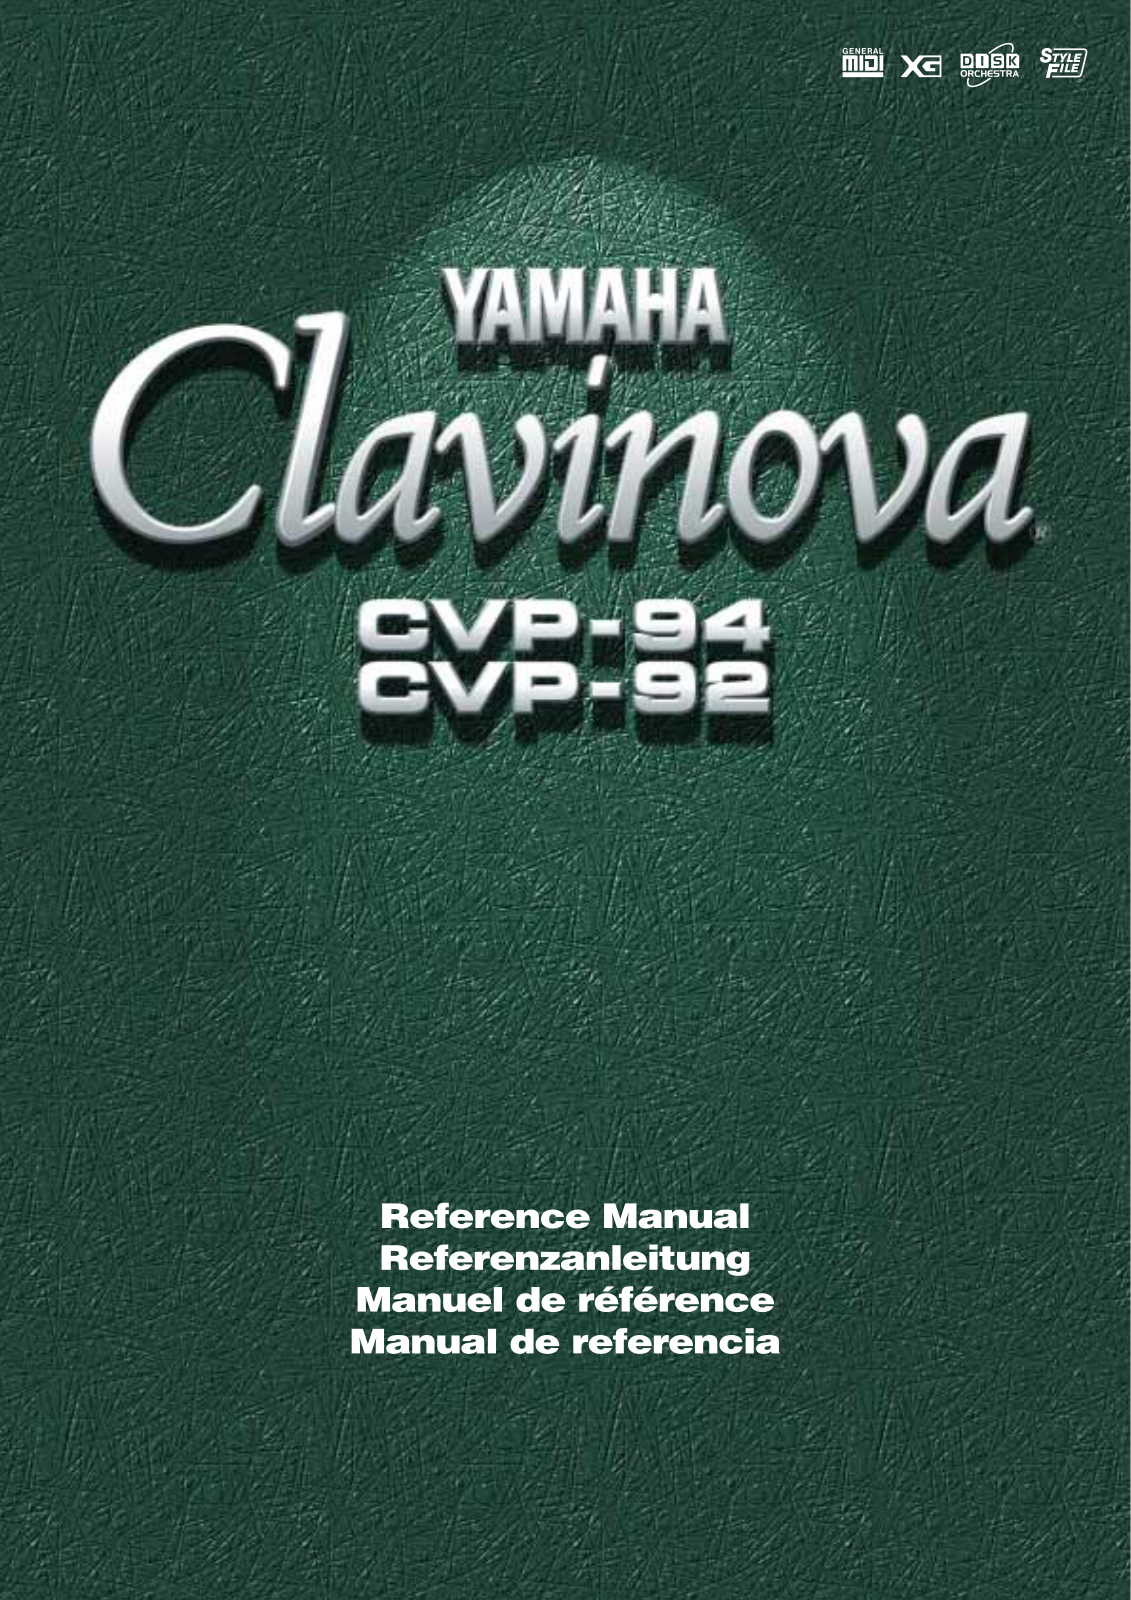 Yamaha CVP-92, CVP-94 Reference Manual